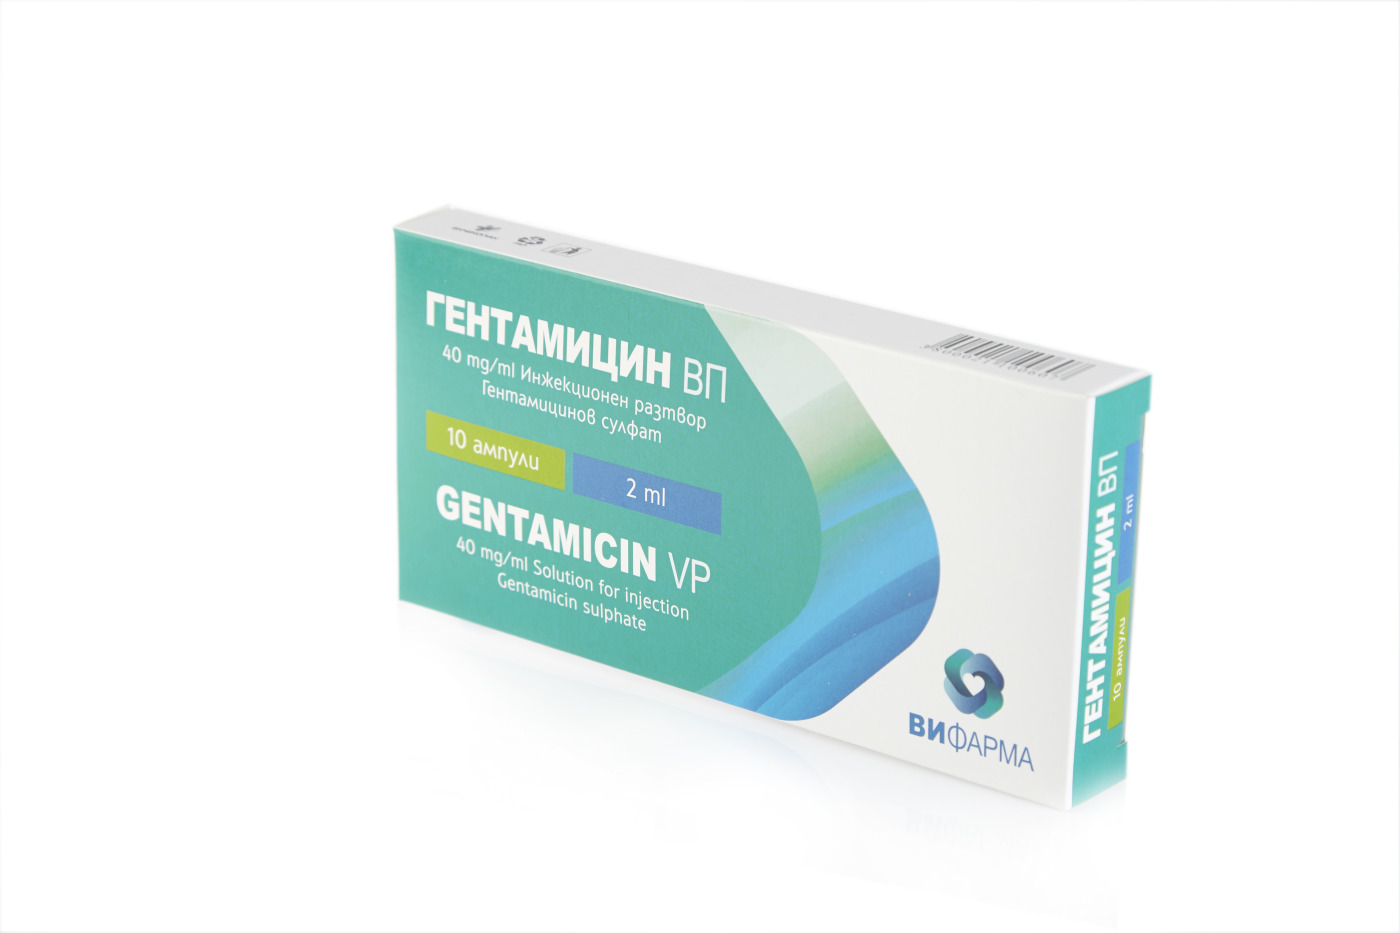 Gentamicin VP